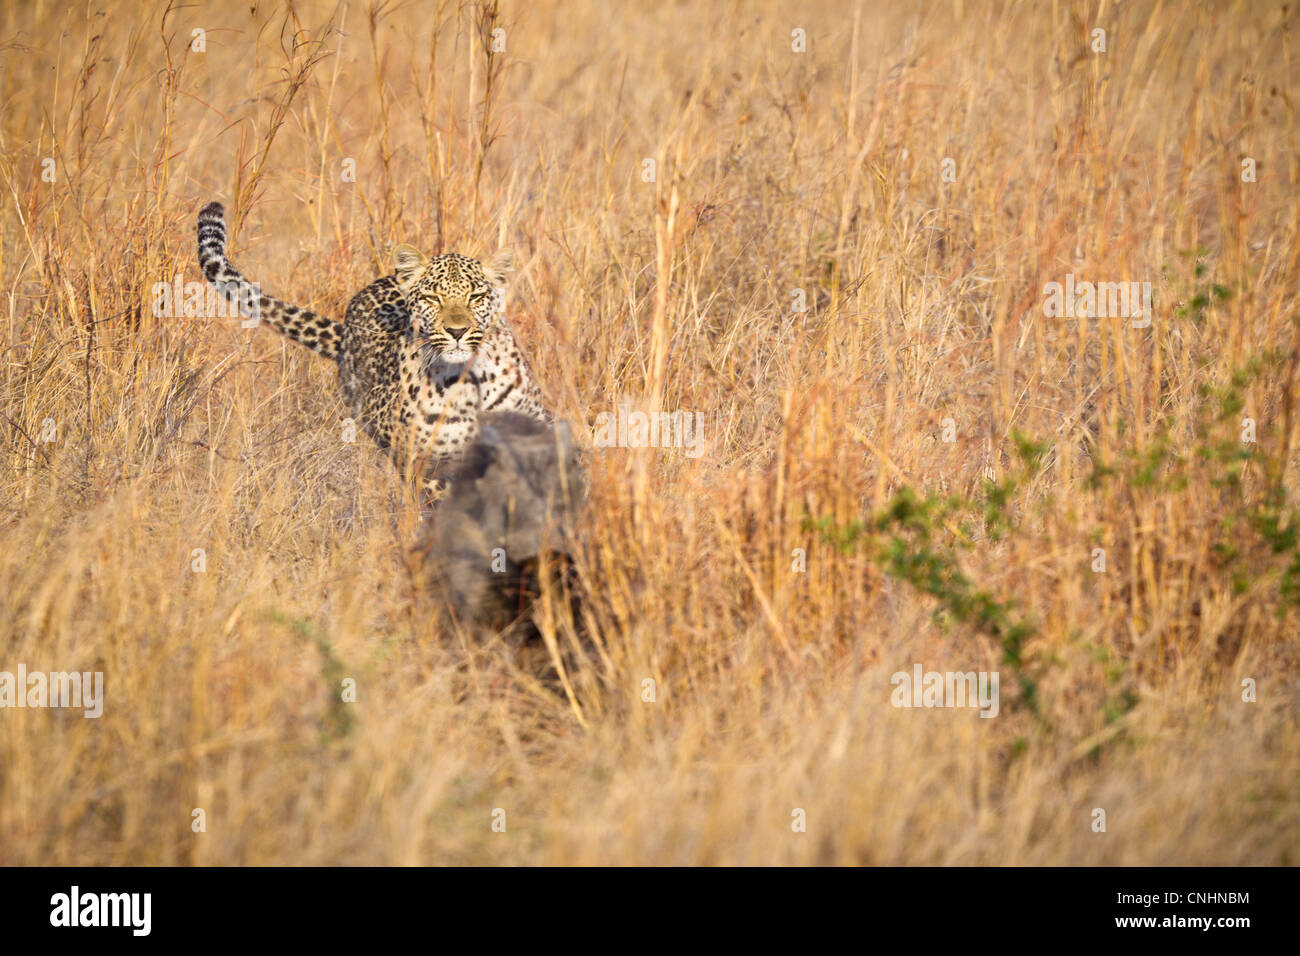 A leopard chasing a warthog through tall grass Stock Photo